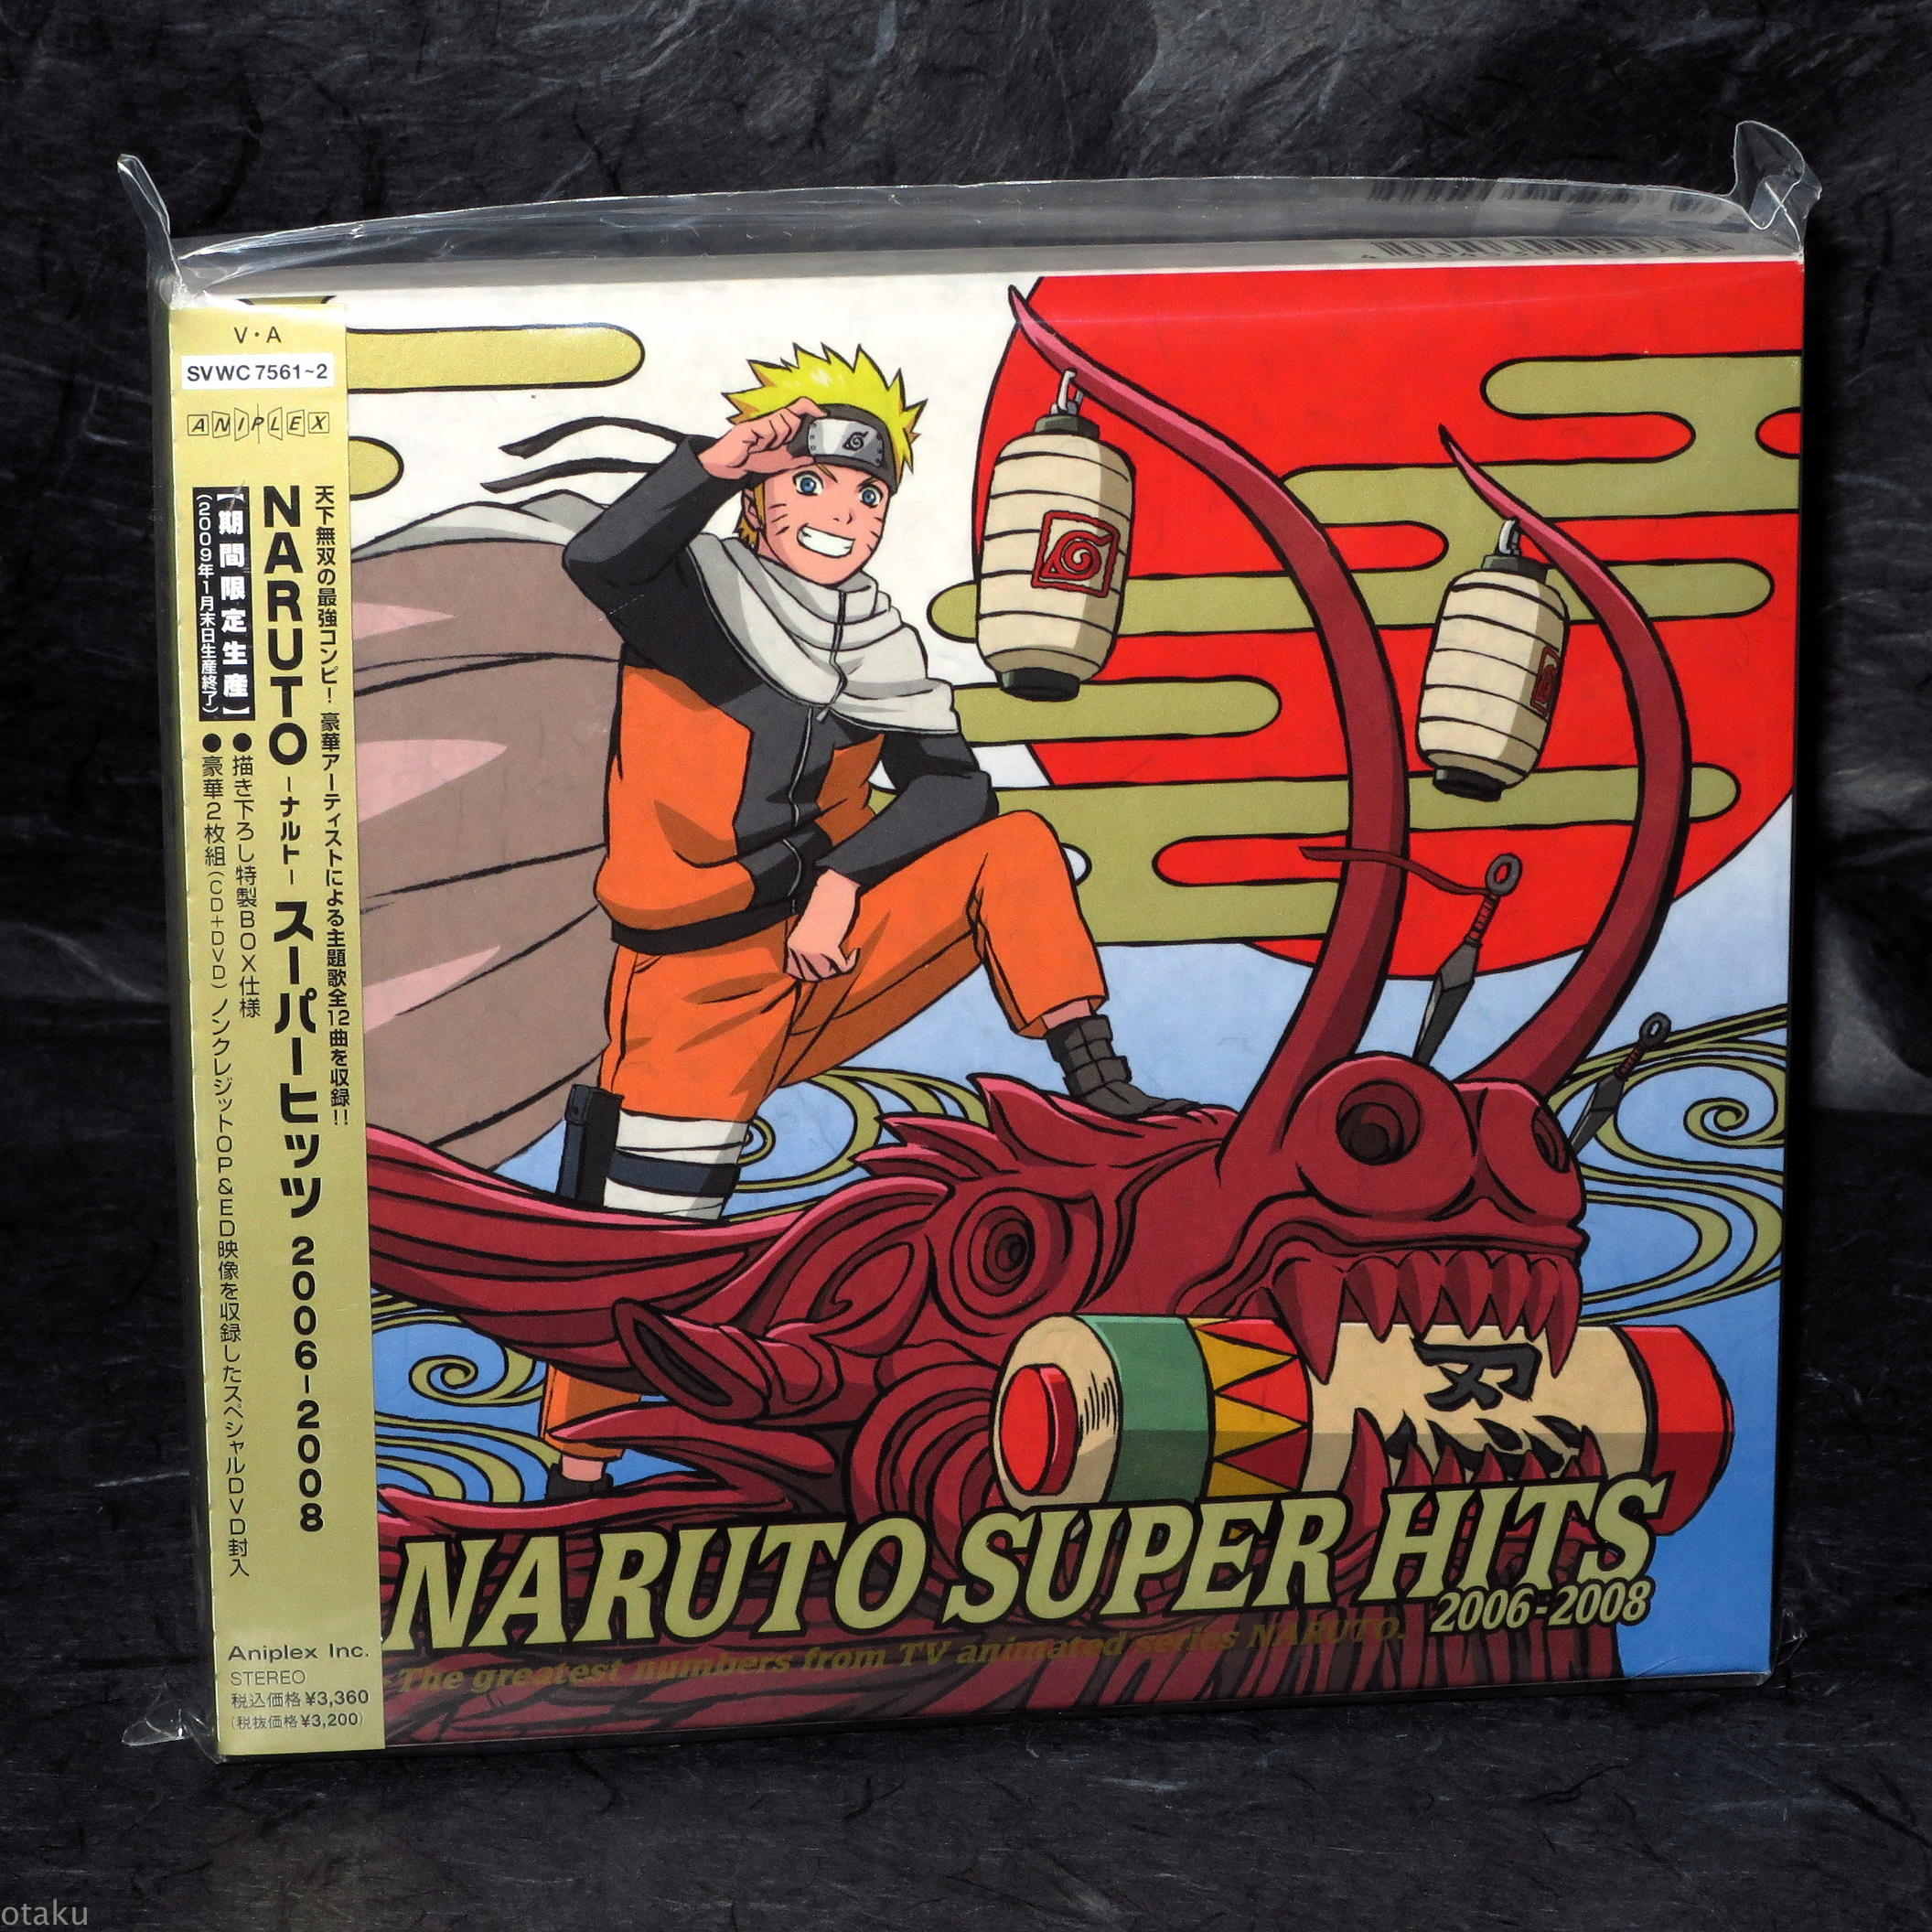 Naruto Super Hits 06 To 08